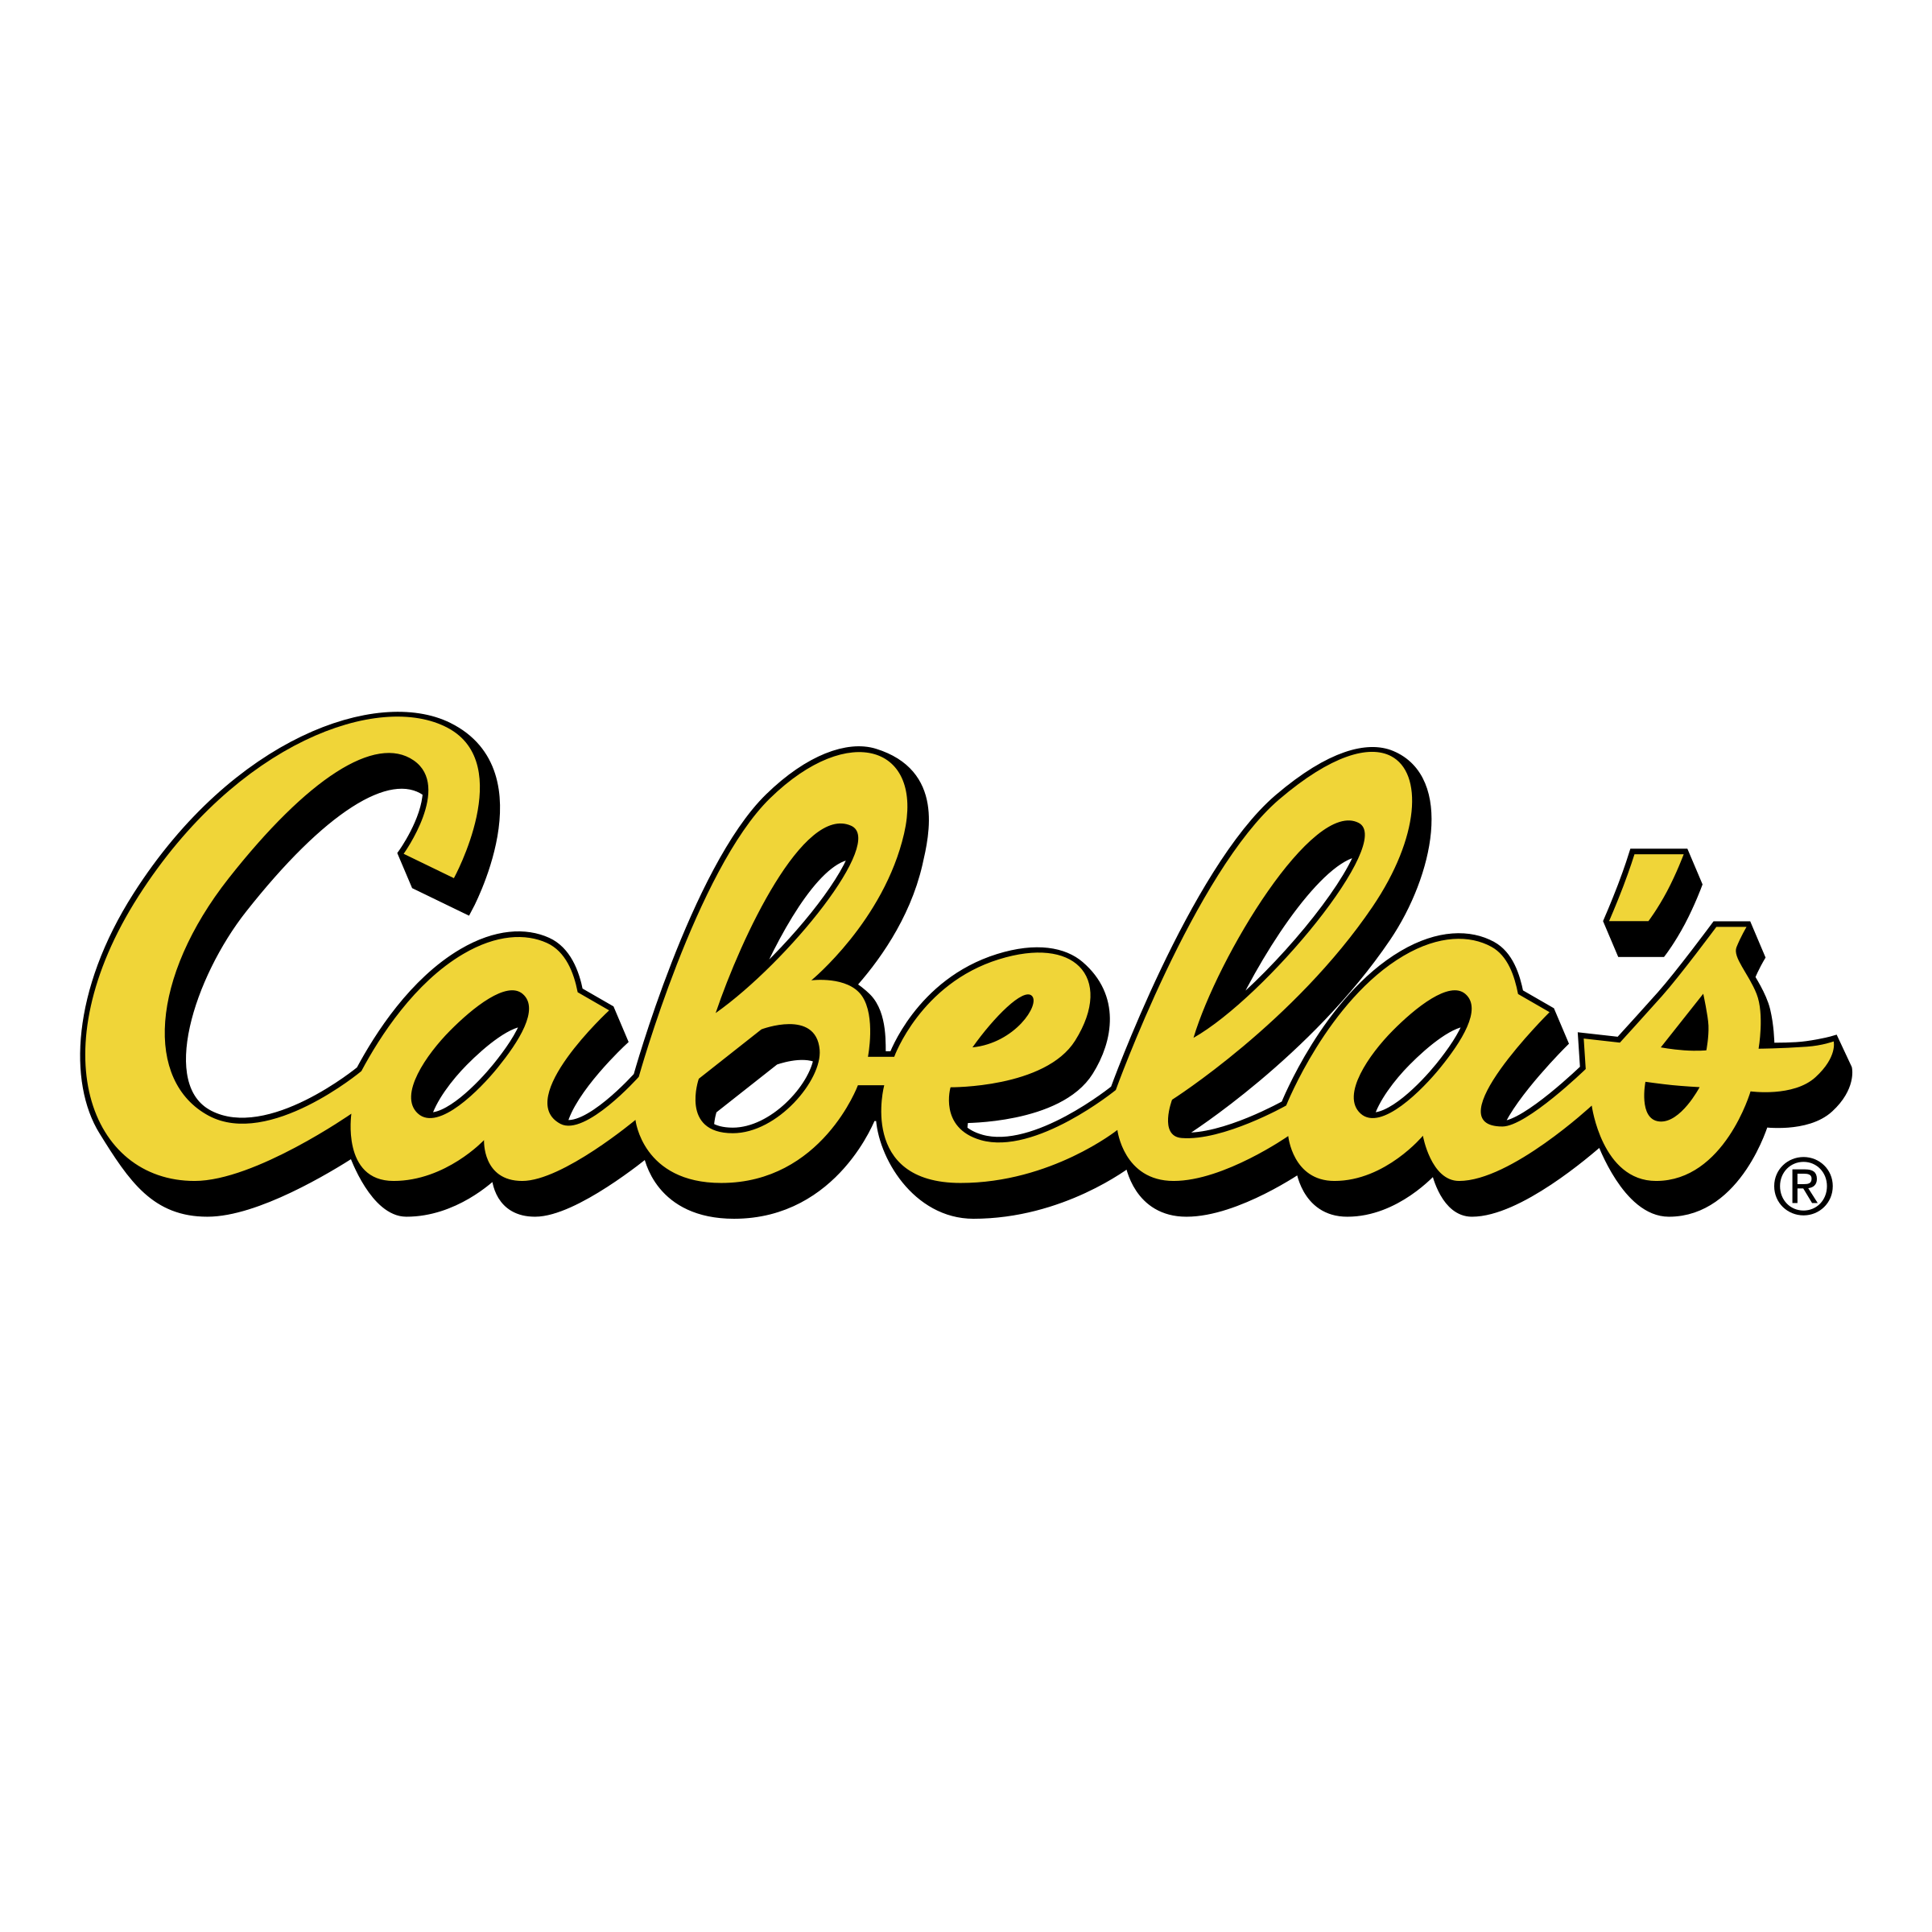 Cabela's Logo - Cabela's Logo PNG Transparent & SVG Vector - Freebie Supply